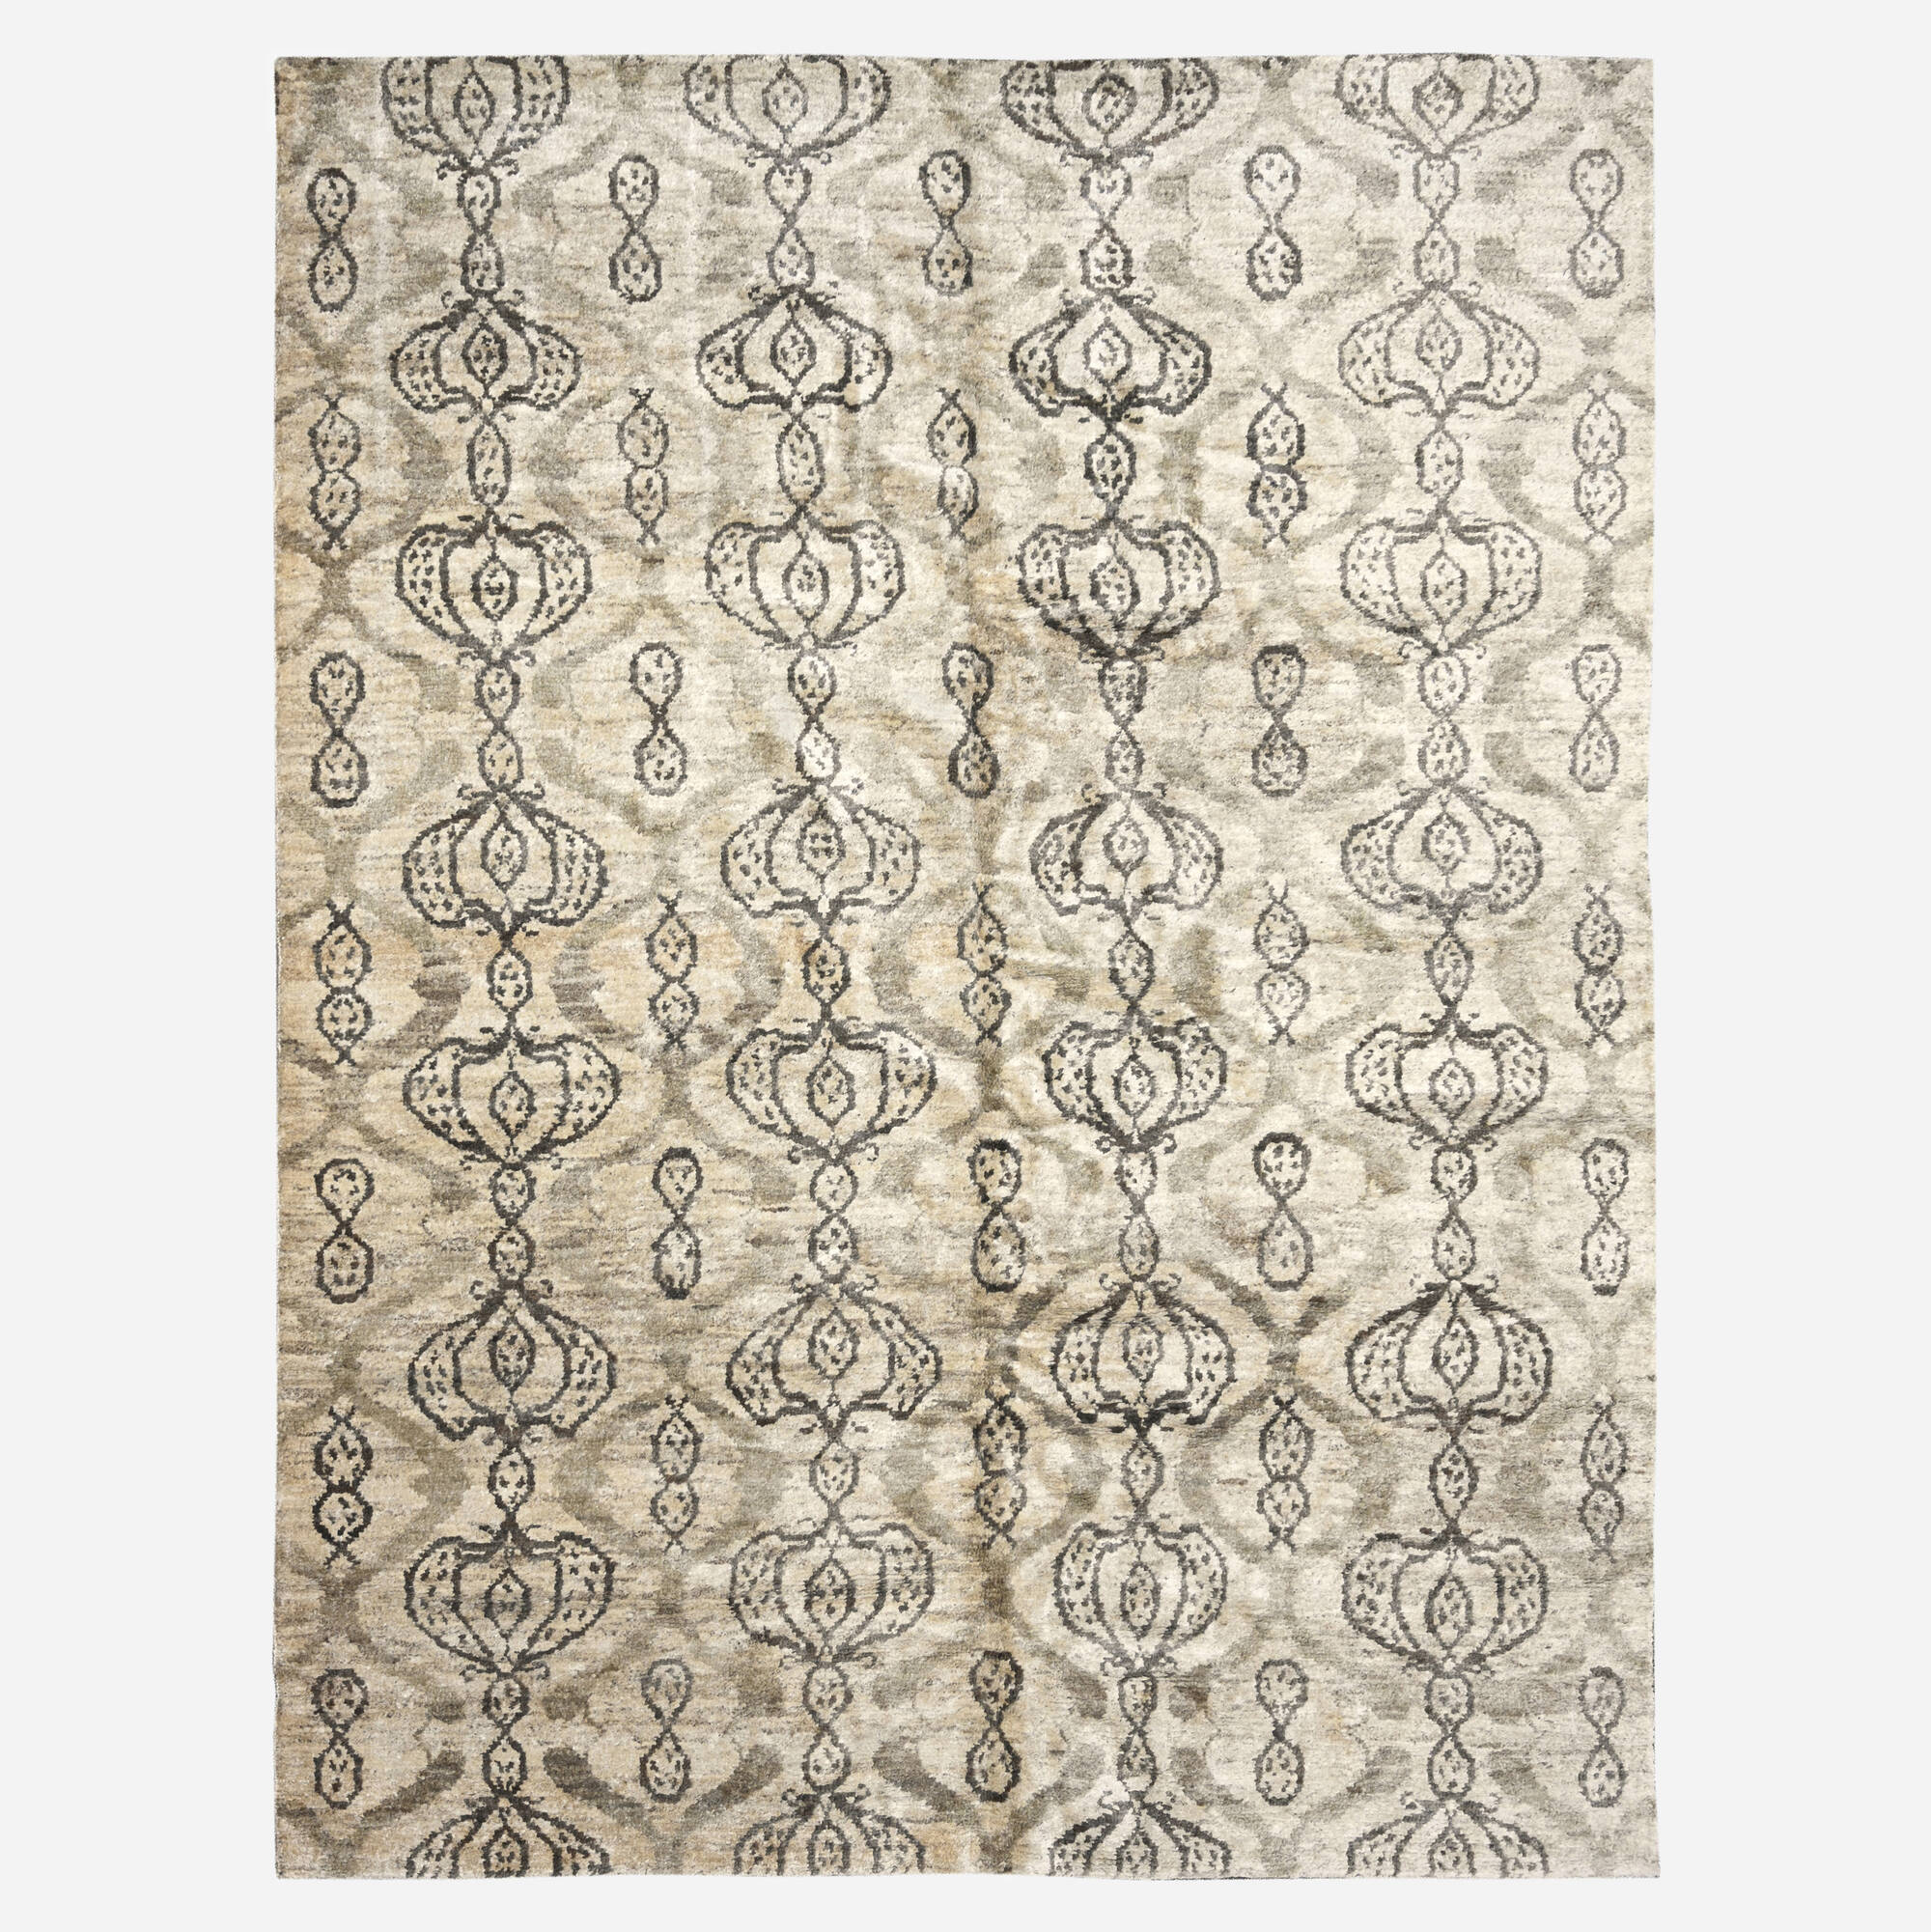 326 1 Art Design February 2021 Bunny Williams Carpet  Wright Auction ?t=1615988585